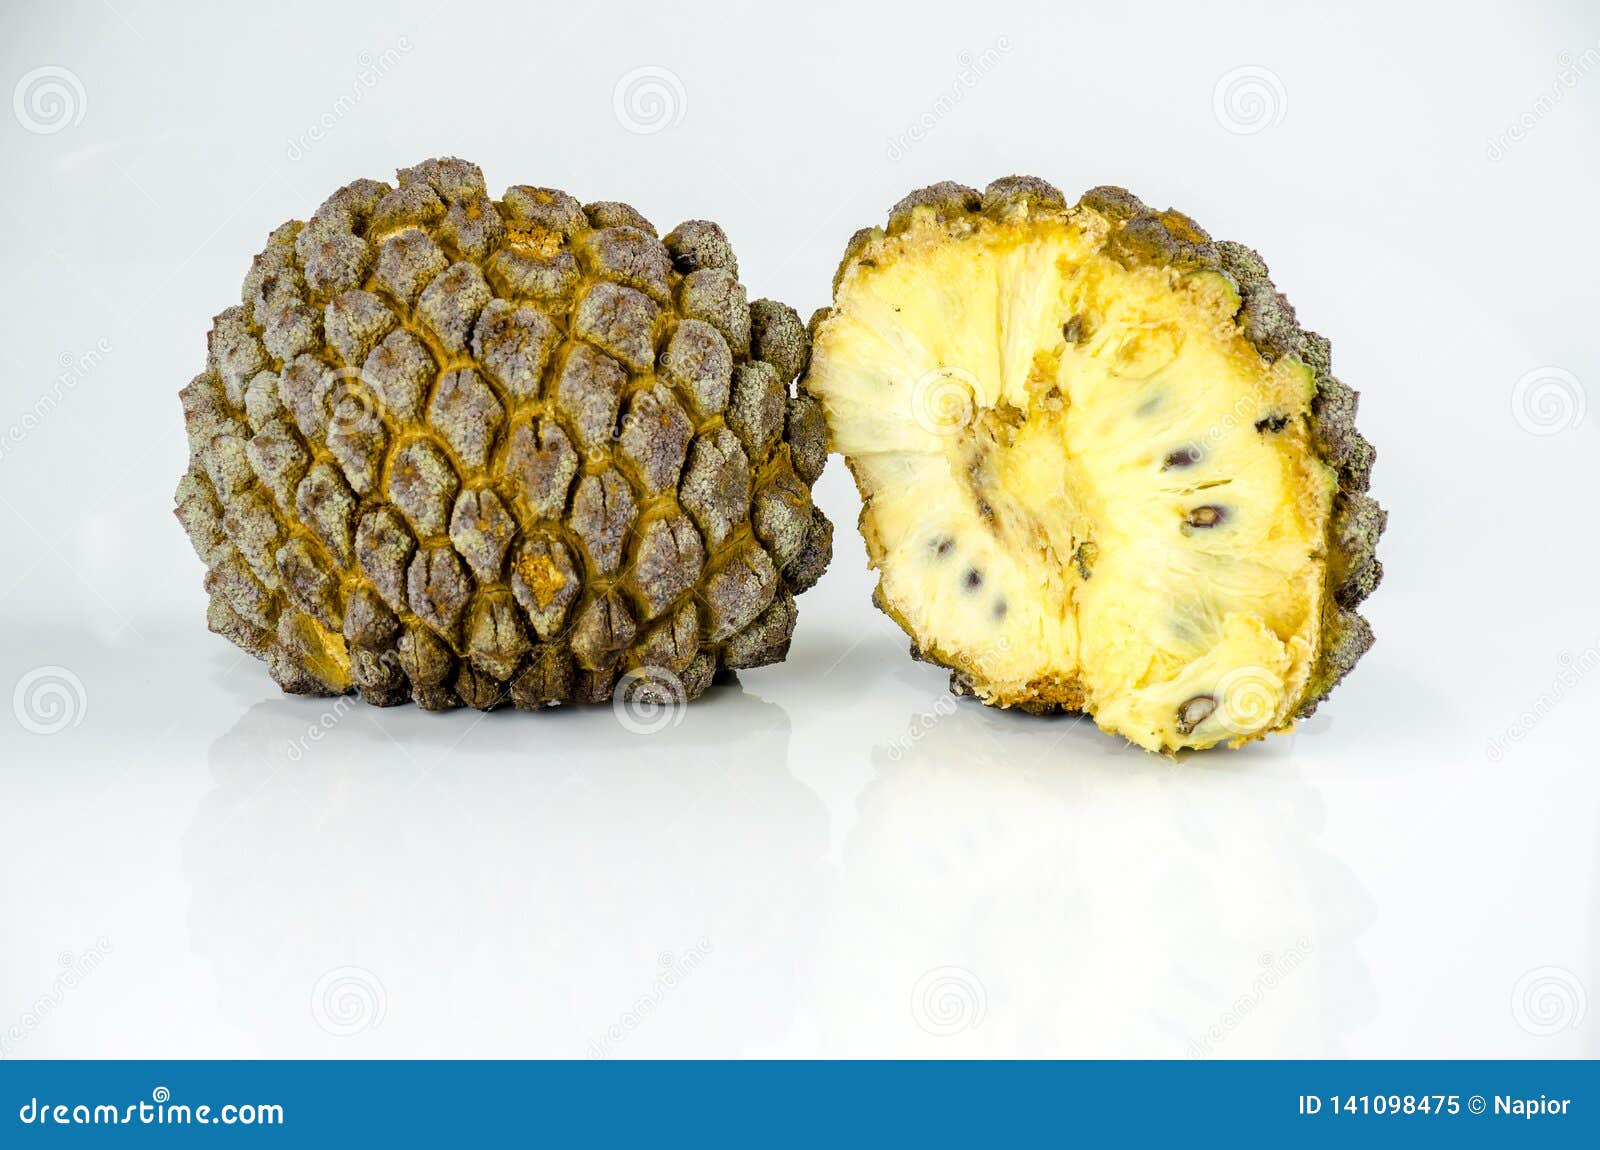 marolo, araticum or bruto fruit . tropical fruit of the original inhabitants of brazil and paraguai. scientific name ; annona